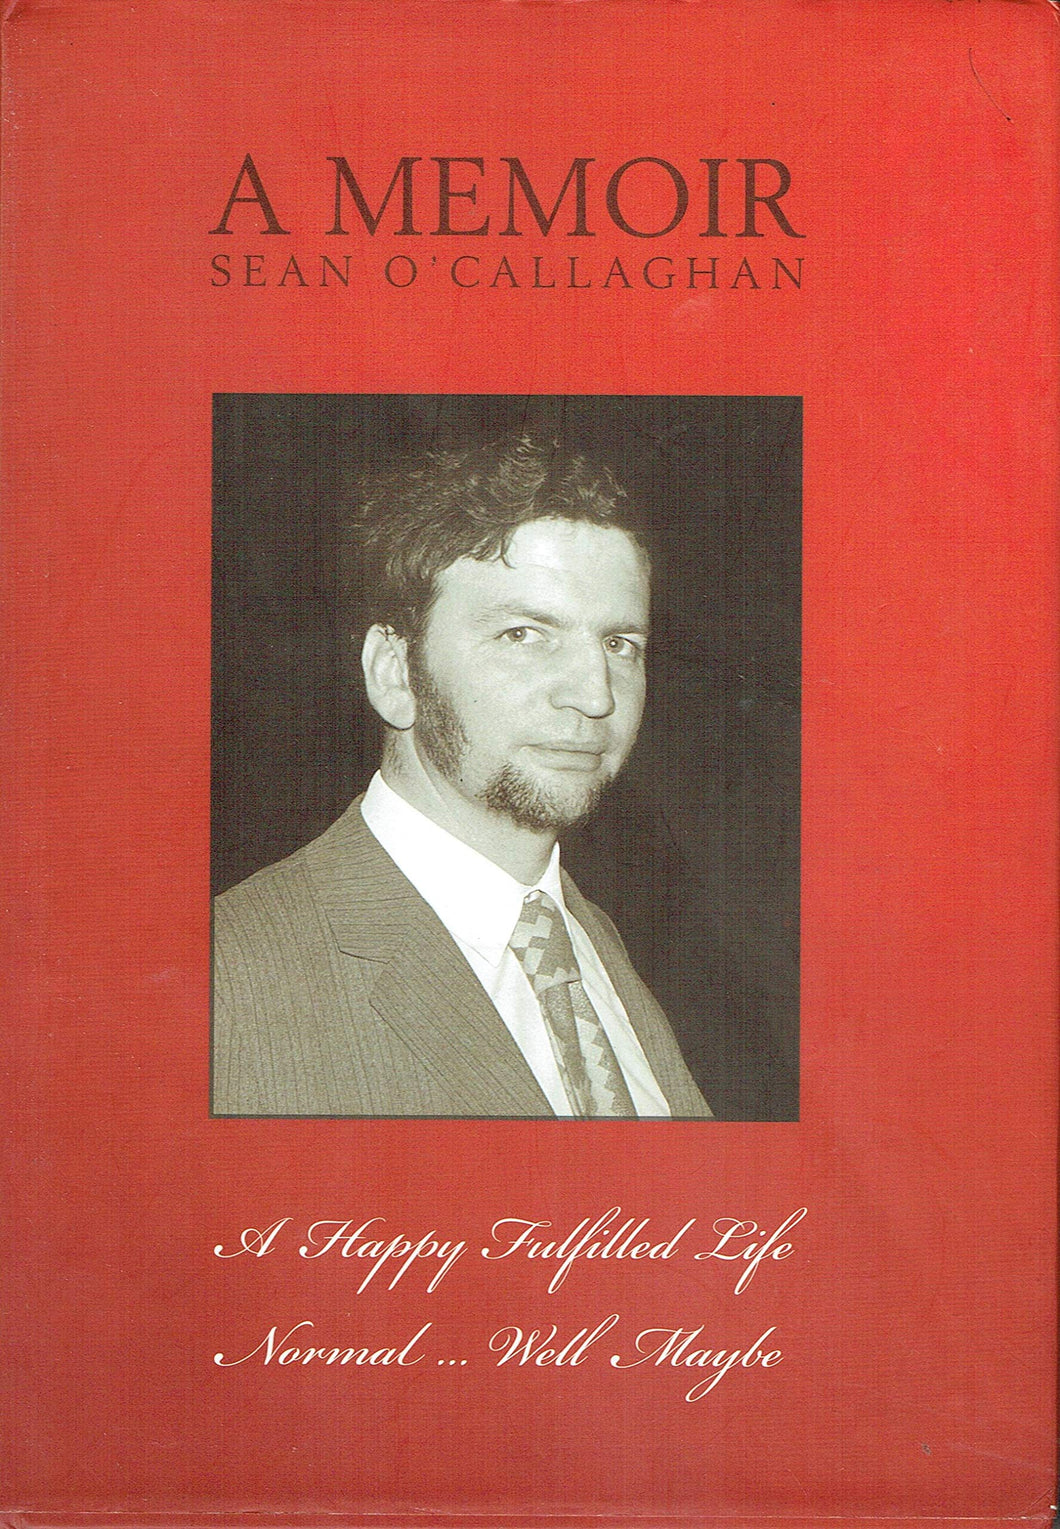 A Memoir: Sean O'Callaghan: A Happy Fulfilled Life - Normal... Well Maybe